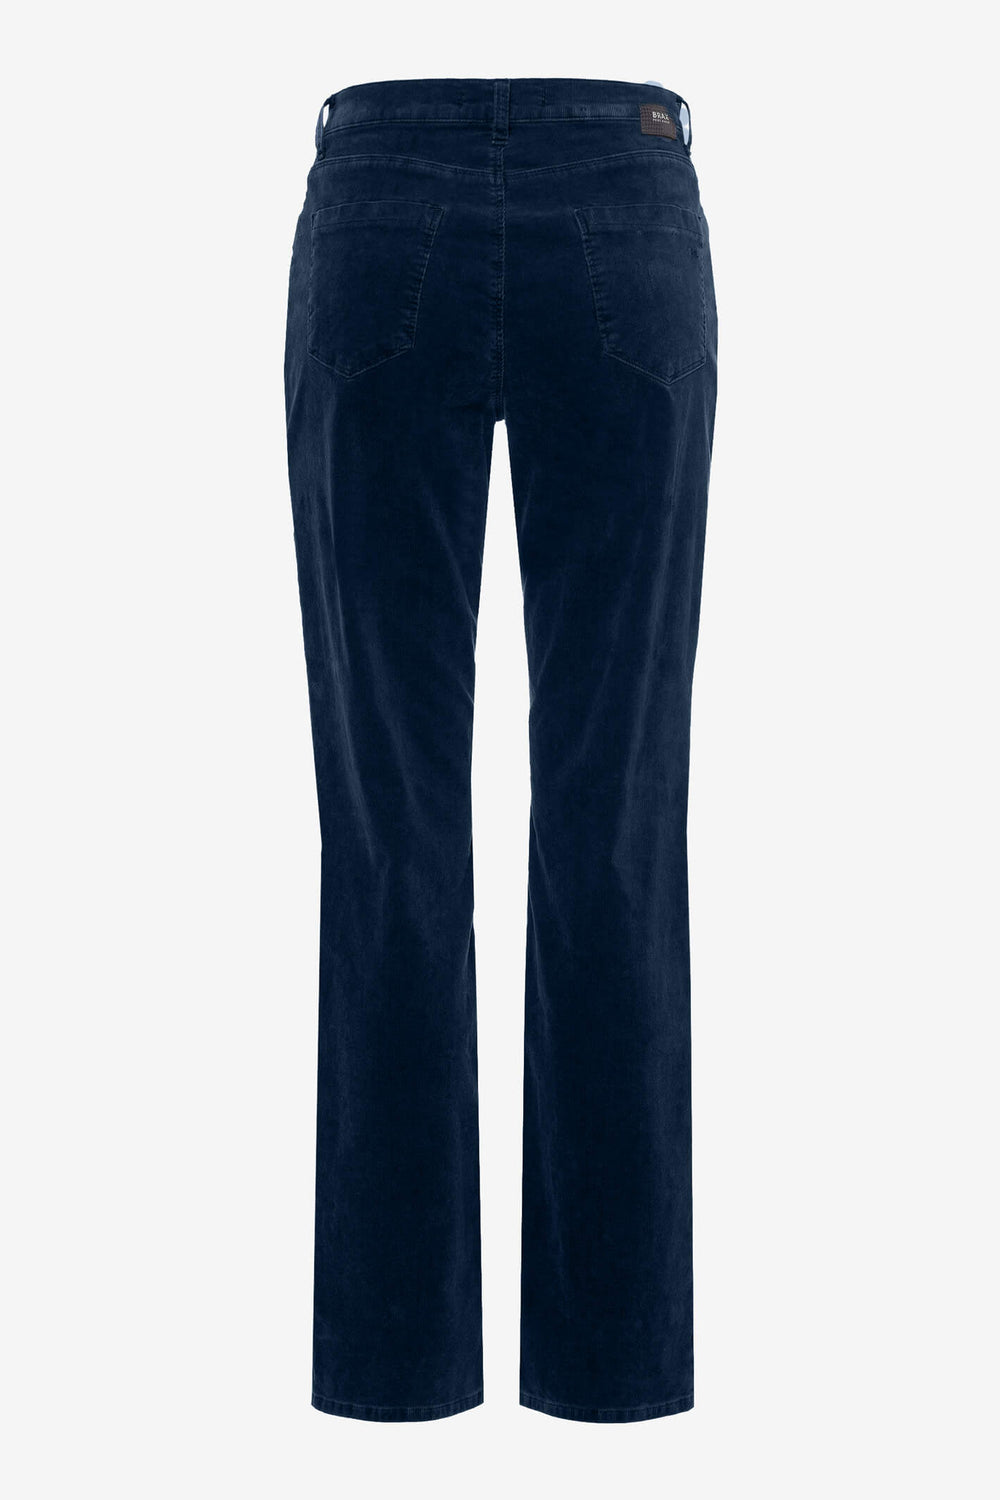 Brax Carola 75-1737/22 Navy Straight Fit Corduroy Jeans - Shirley Allum Boutique